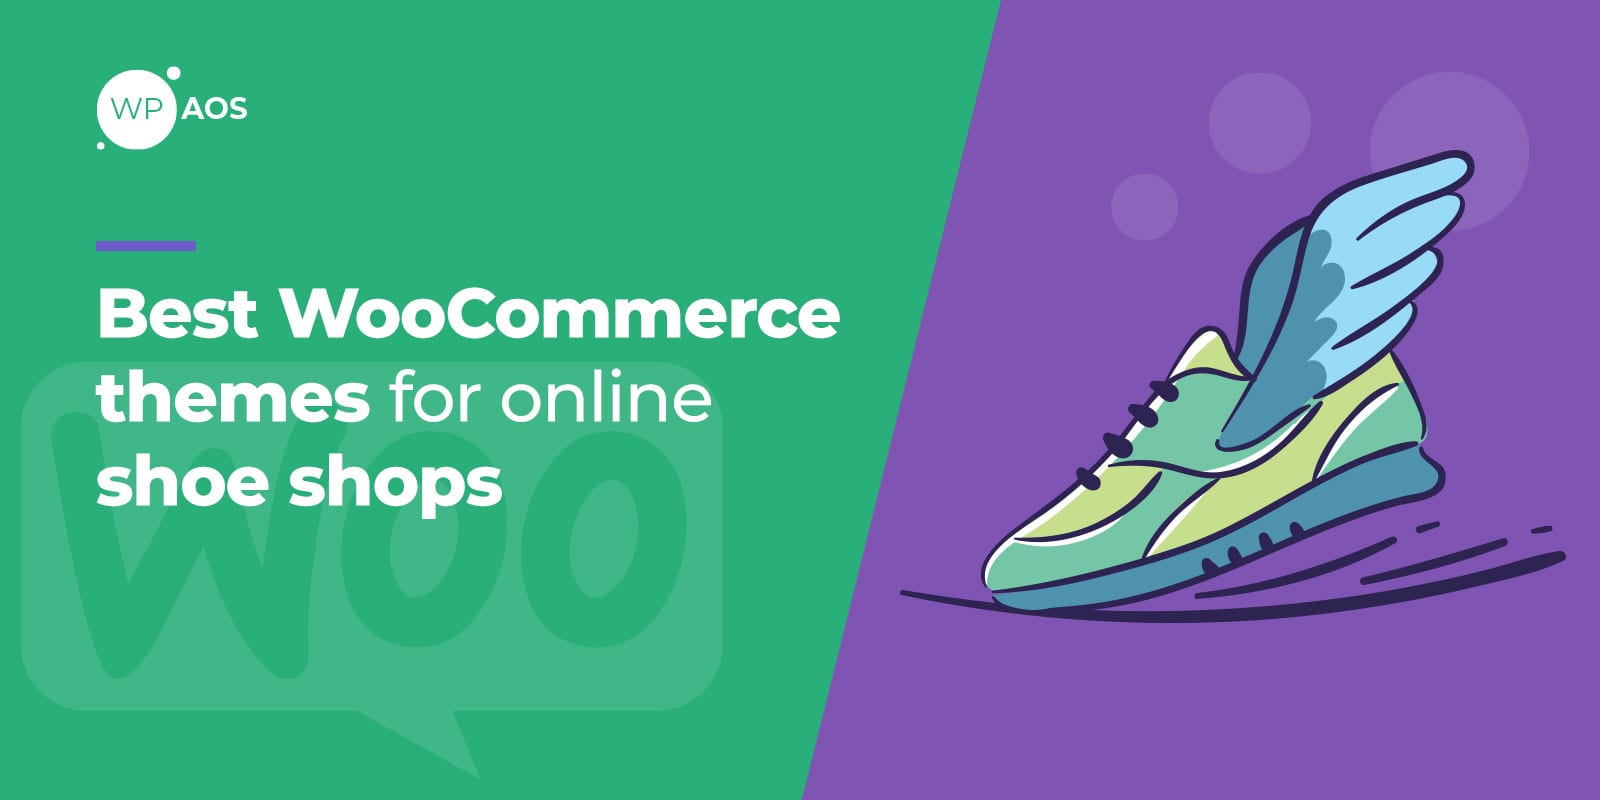 WooCommerce Themes, Shoe Shop Themes, WordPress Website